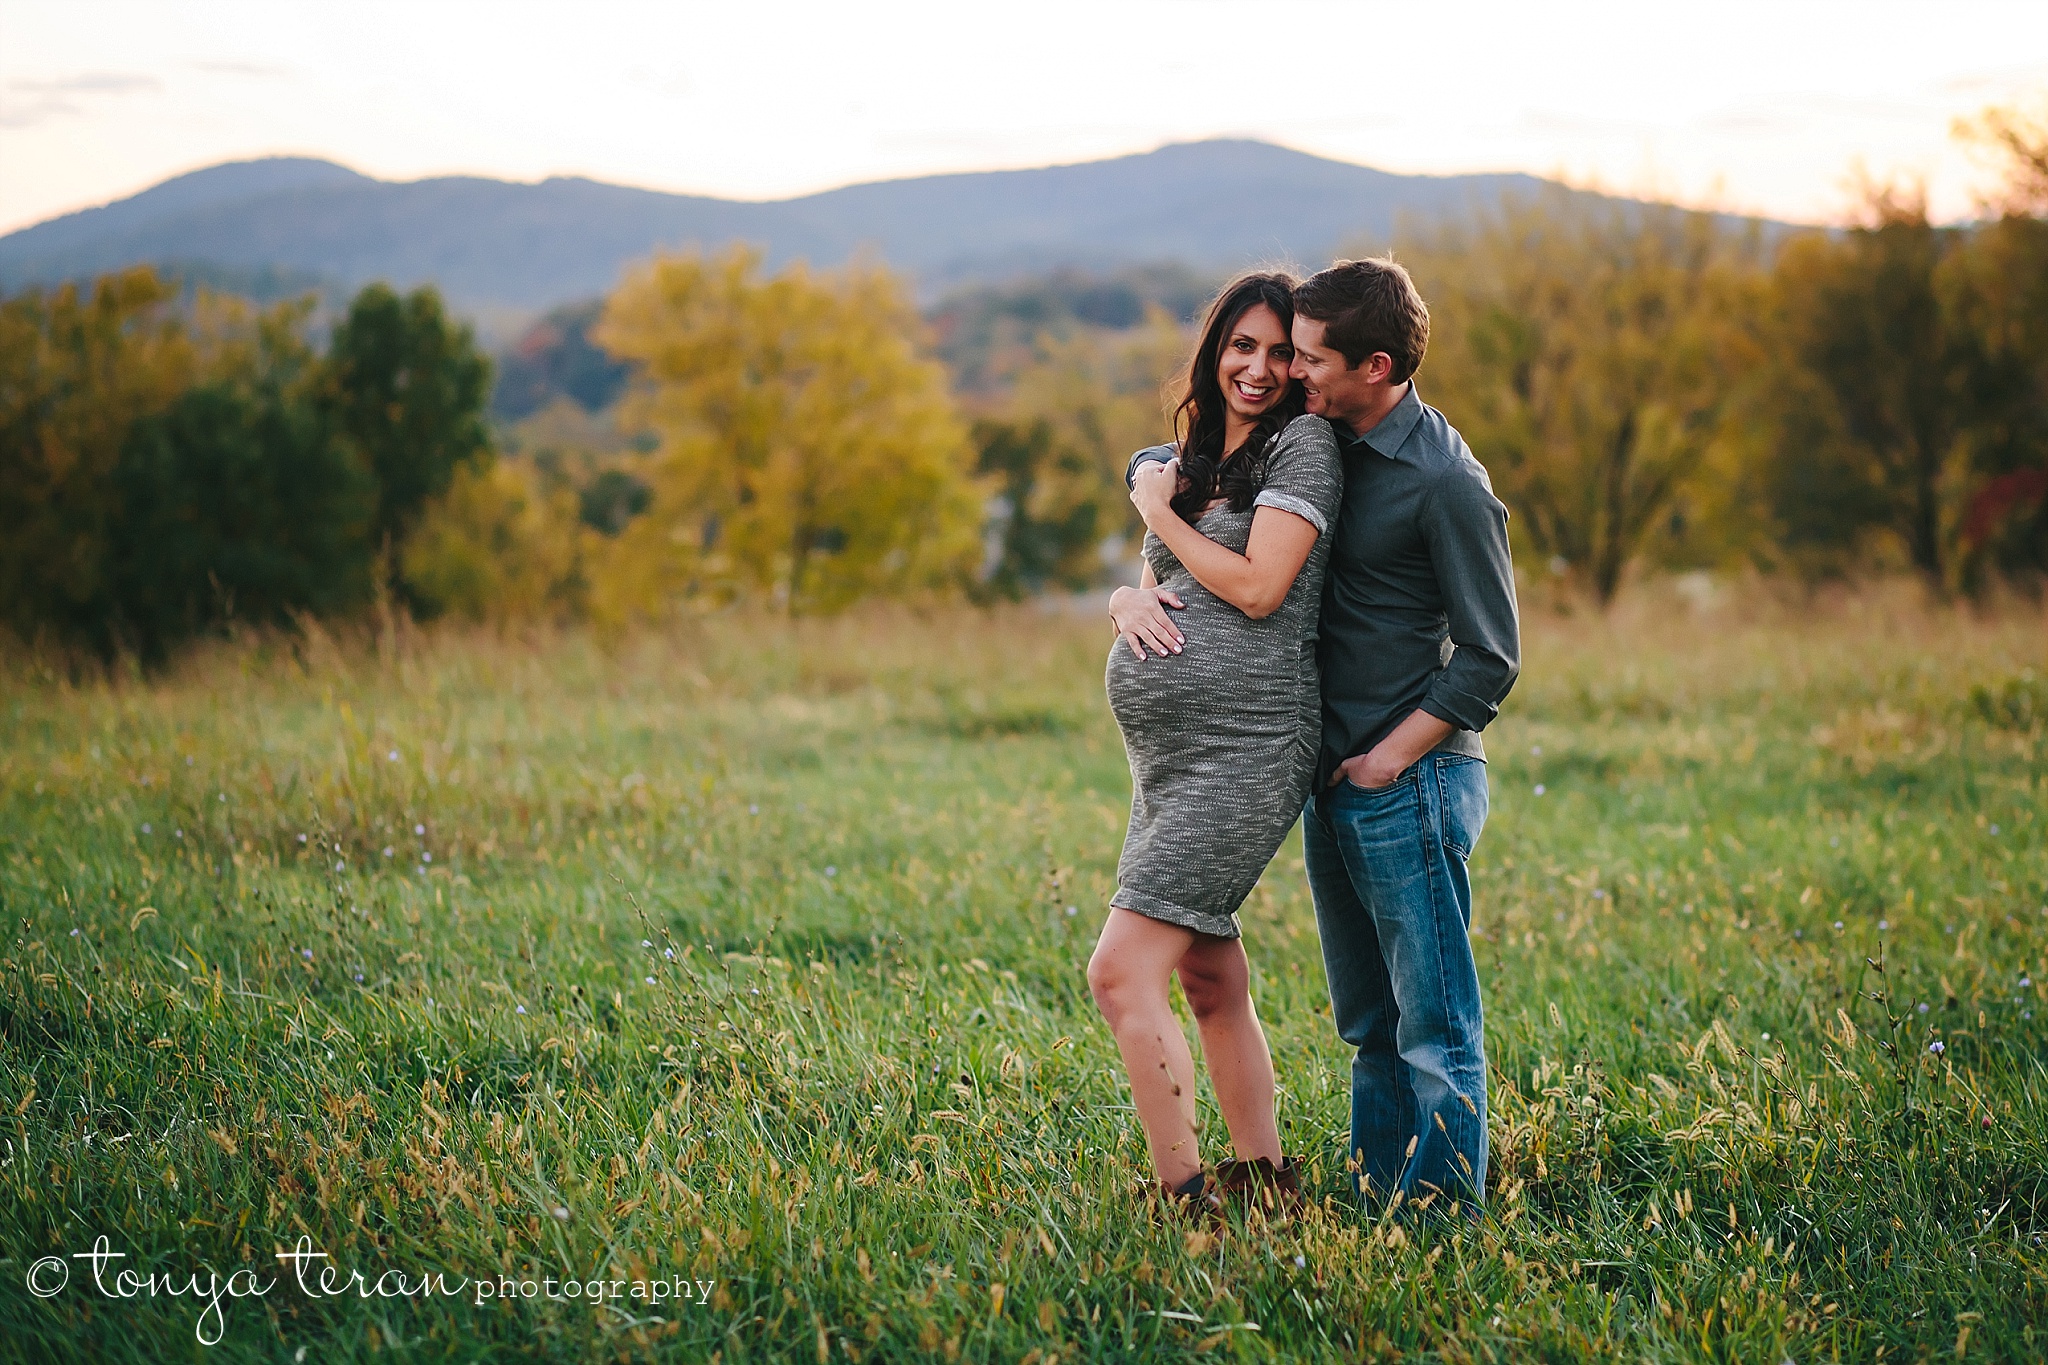 Mini Maternity Outdoor Photo Session | Tonya Teran Photography, Frederick, MD Newborn, Baby, and Family Photographer